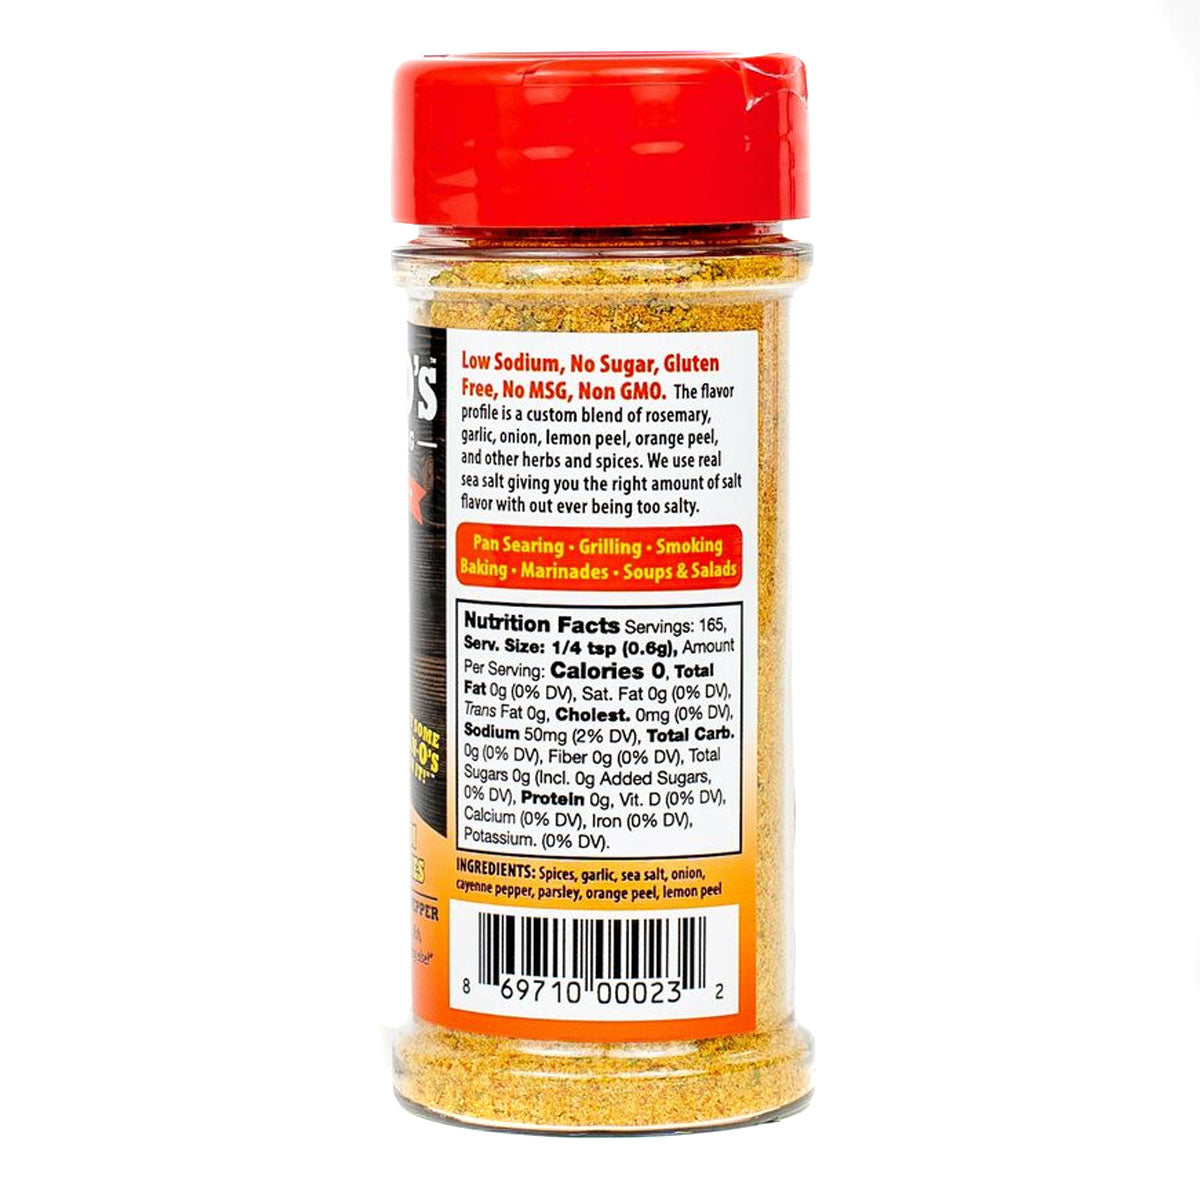 Dan-O's Spicy Original Low Sodium Seasoning 3.5 Oz Bottle Gluten Free –  Pricedrightsales